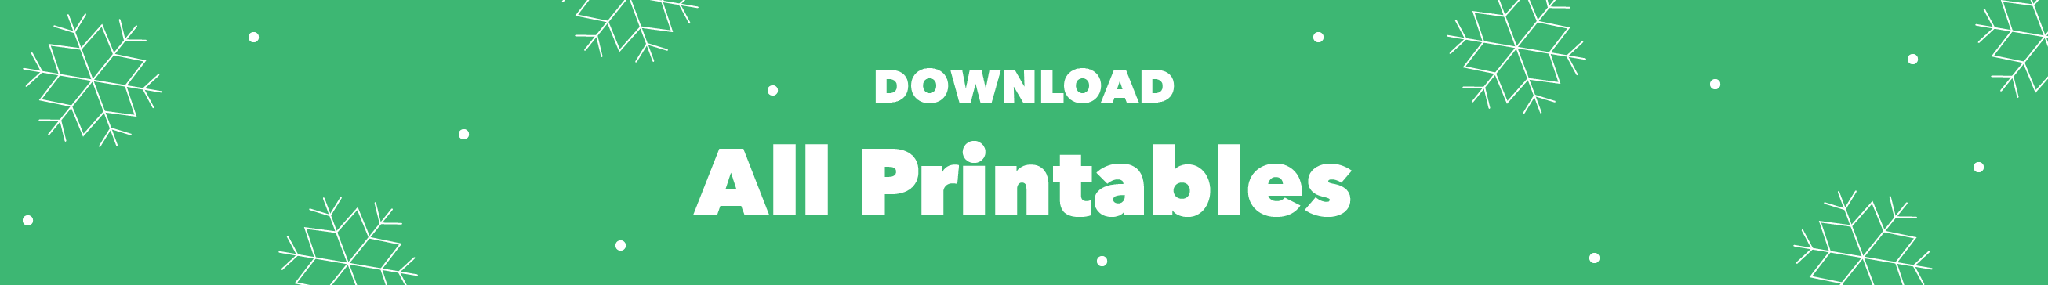 Button- All printables